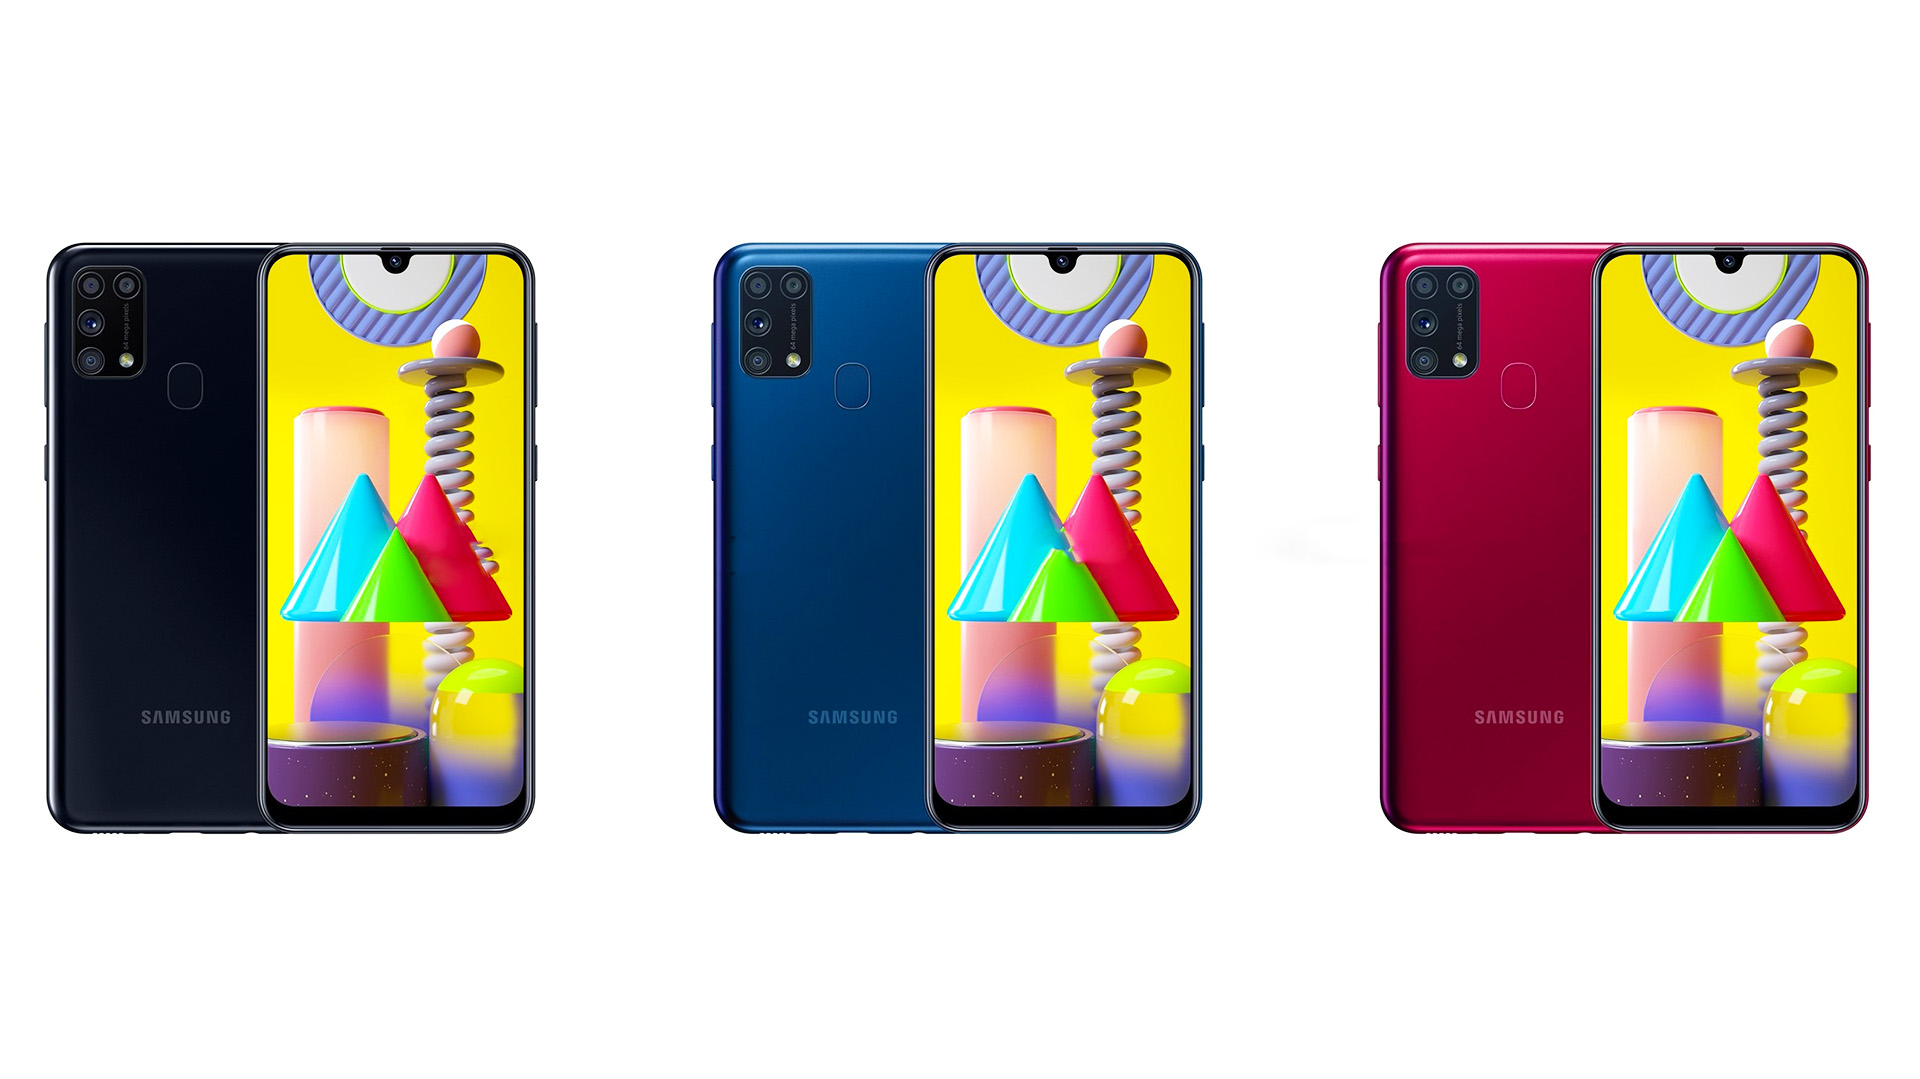 Samsung Galaxy M31 with three colors - 6000 mAh Battery